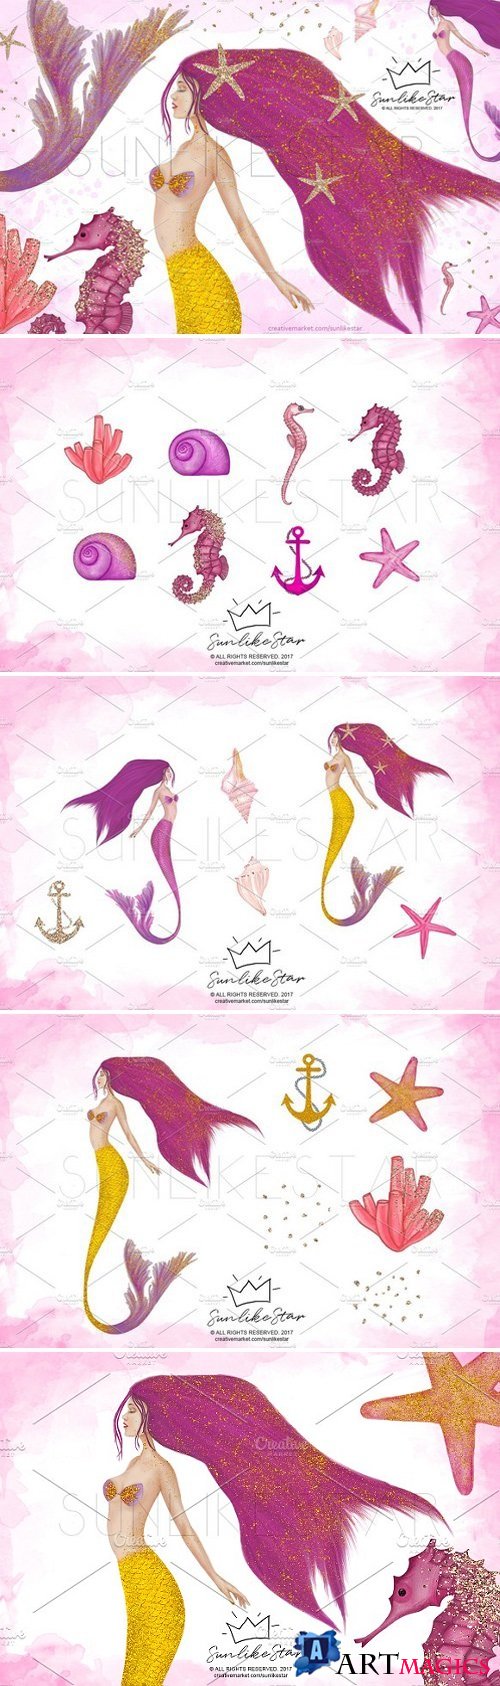 Mermaid Illustration Clip Art Pack 2055607